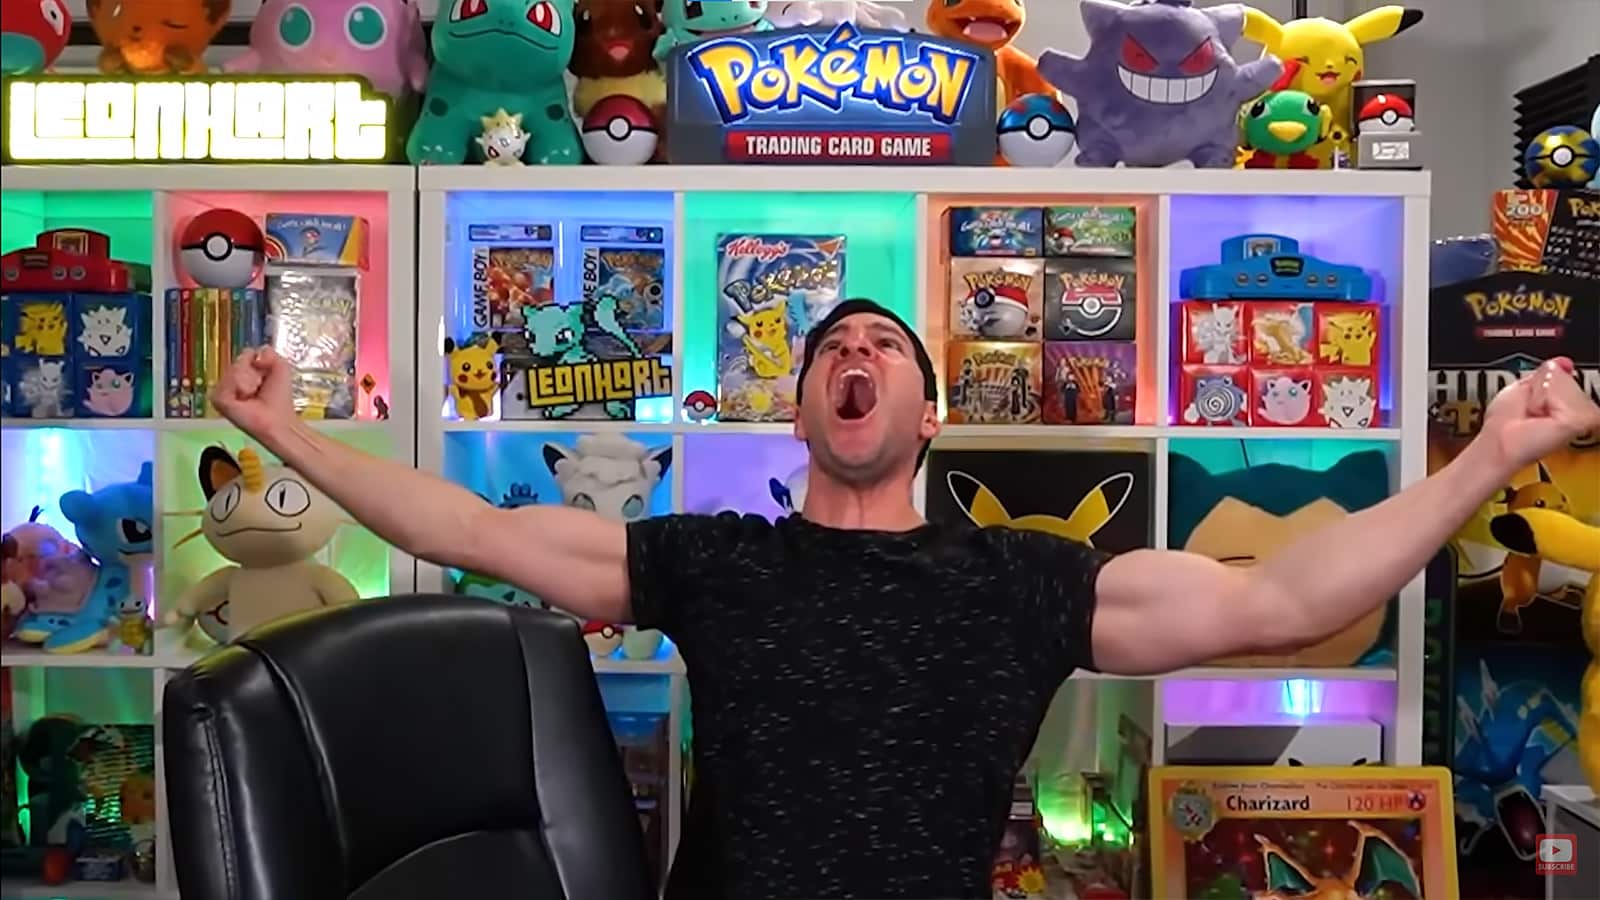 Pokemon YouTuber Leonhart celebrates pulling rare Charizard card screenshot.